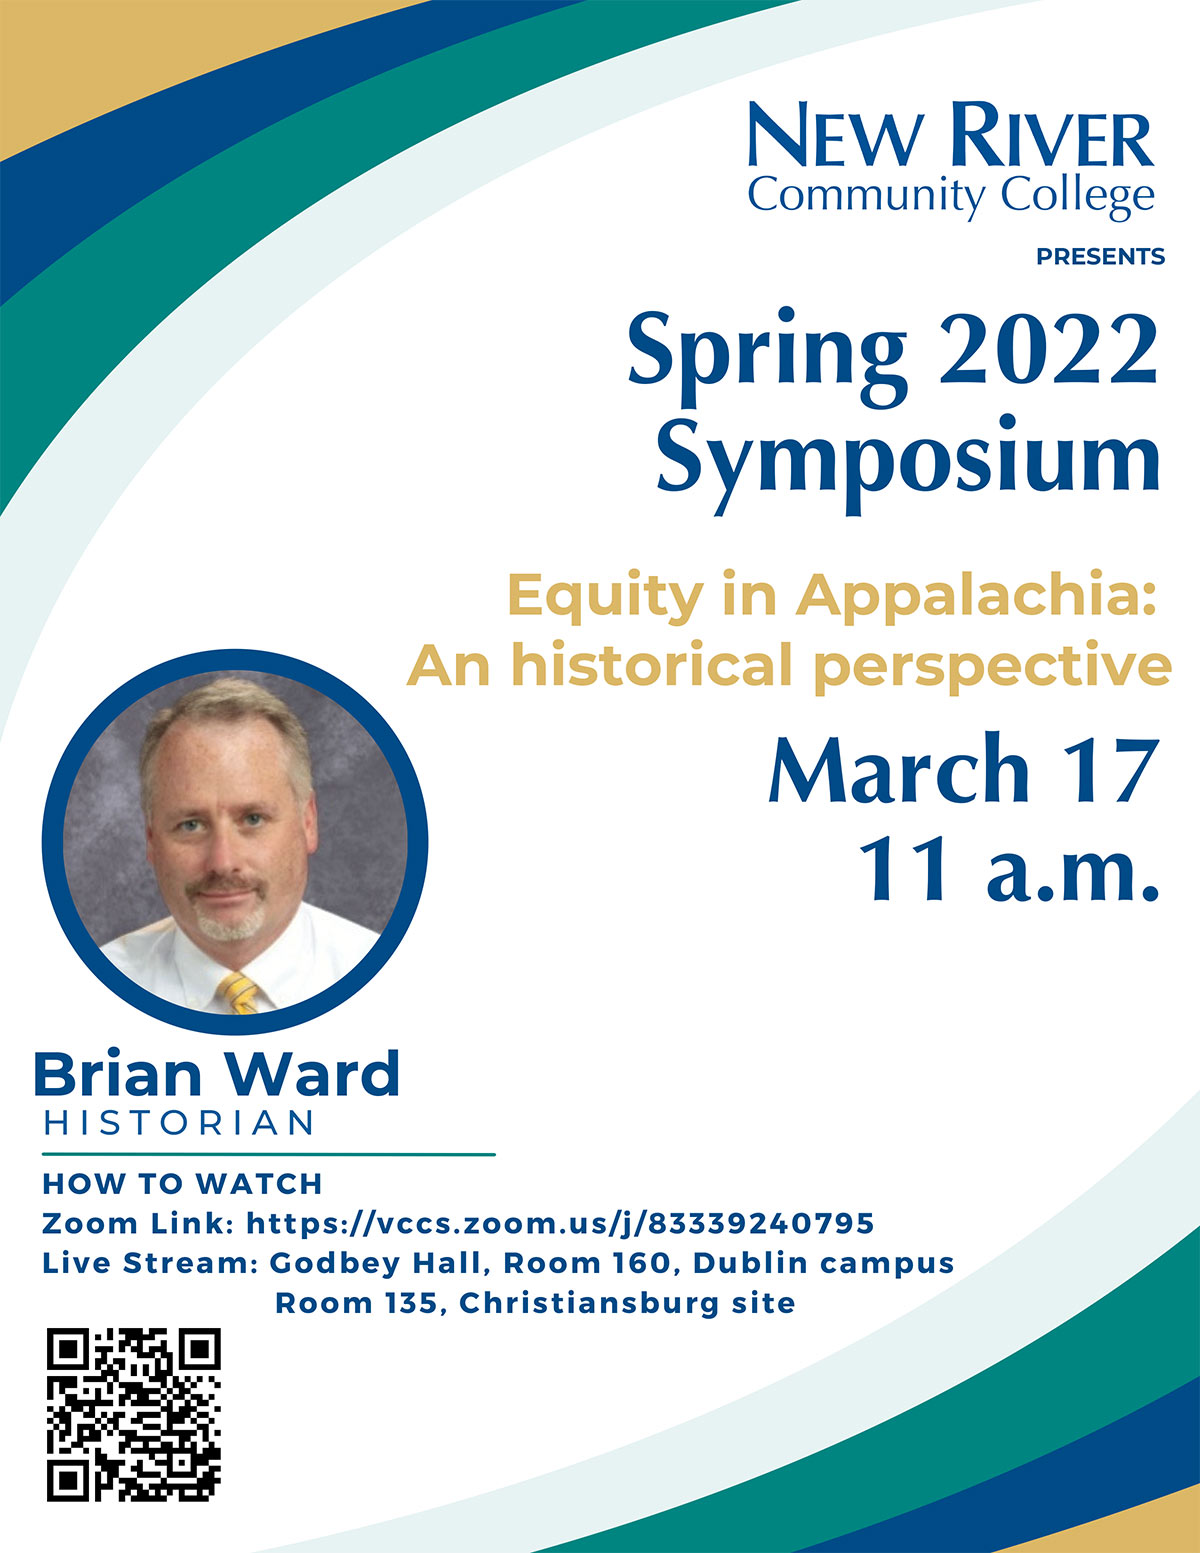 Spring Symposium flyer